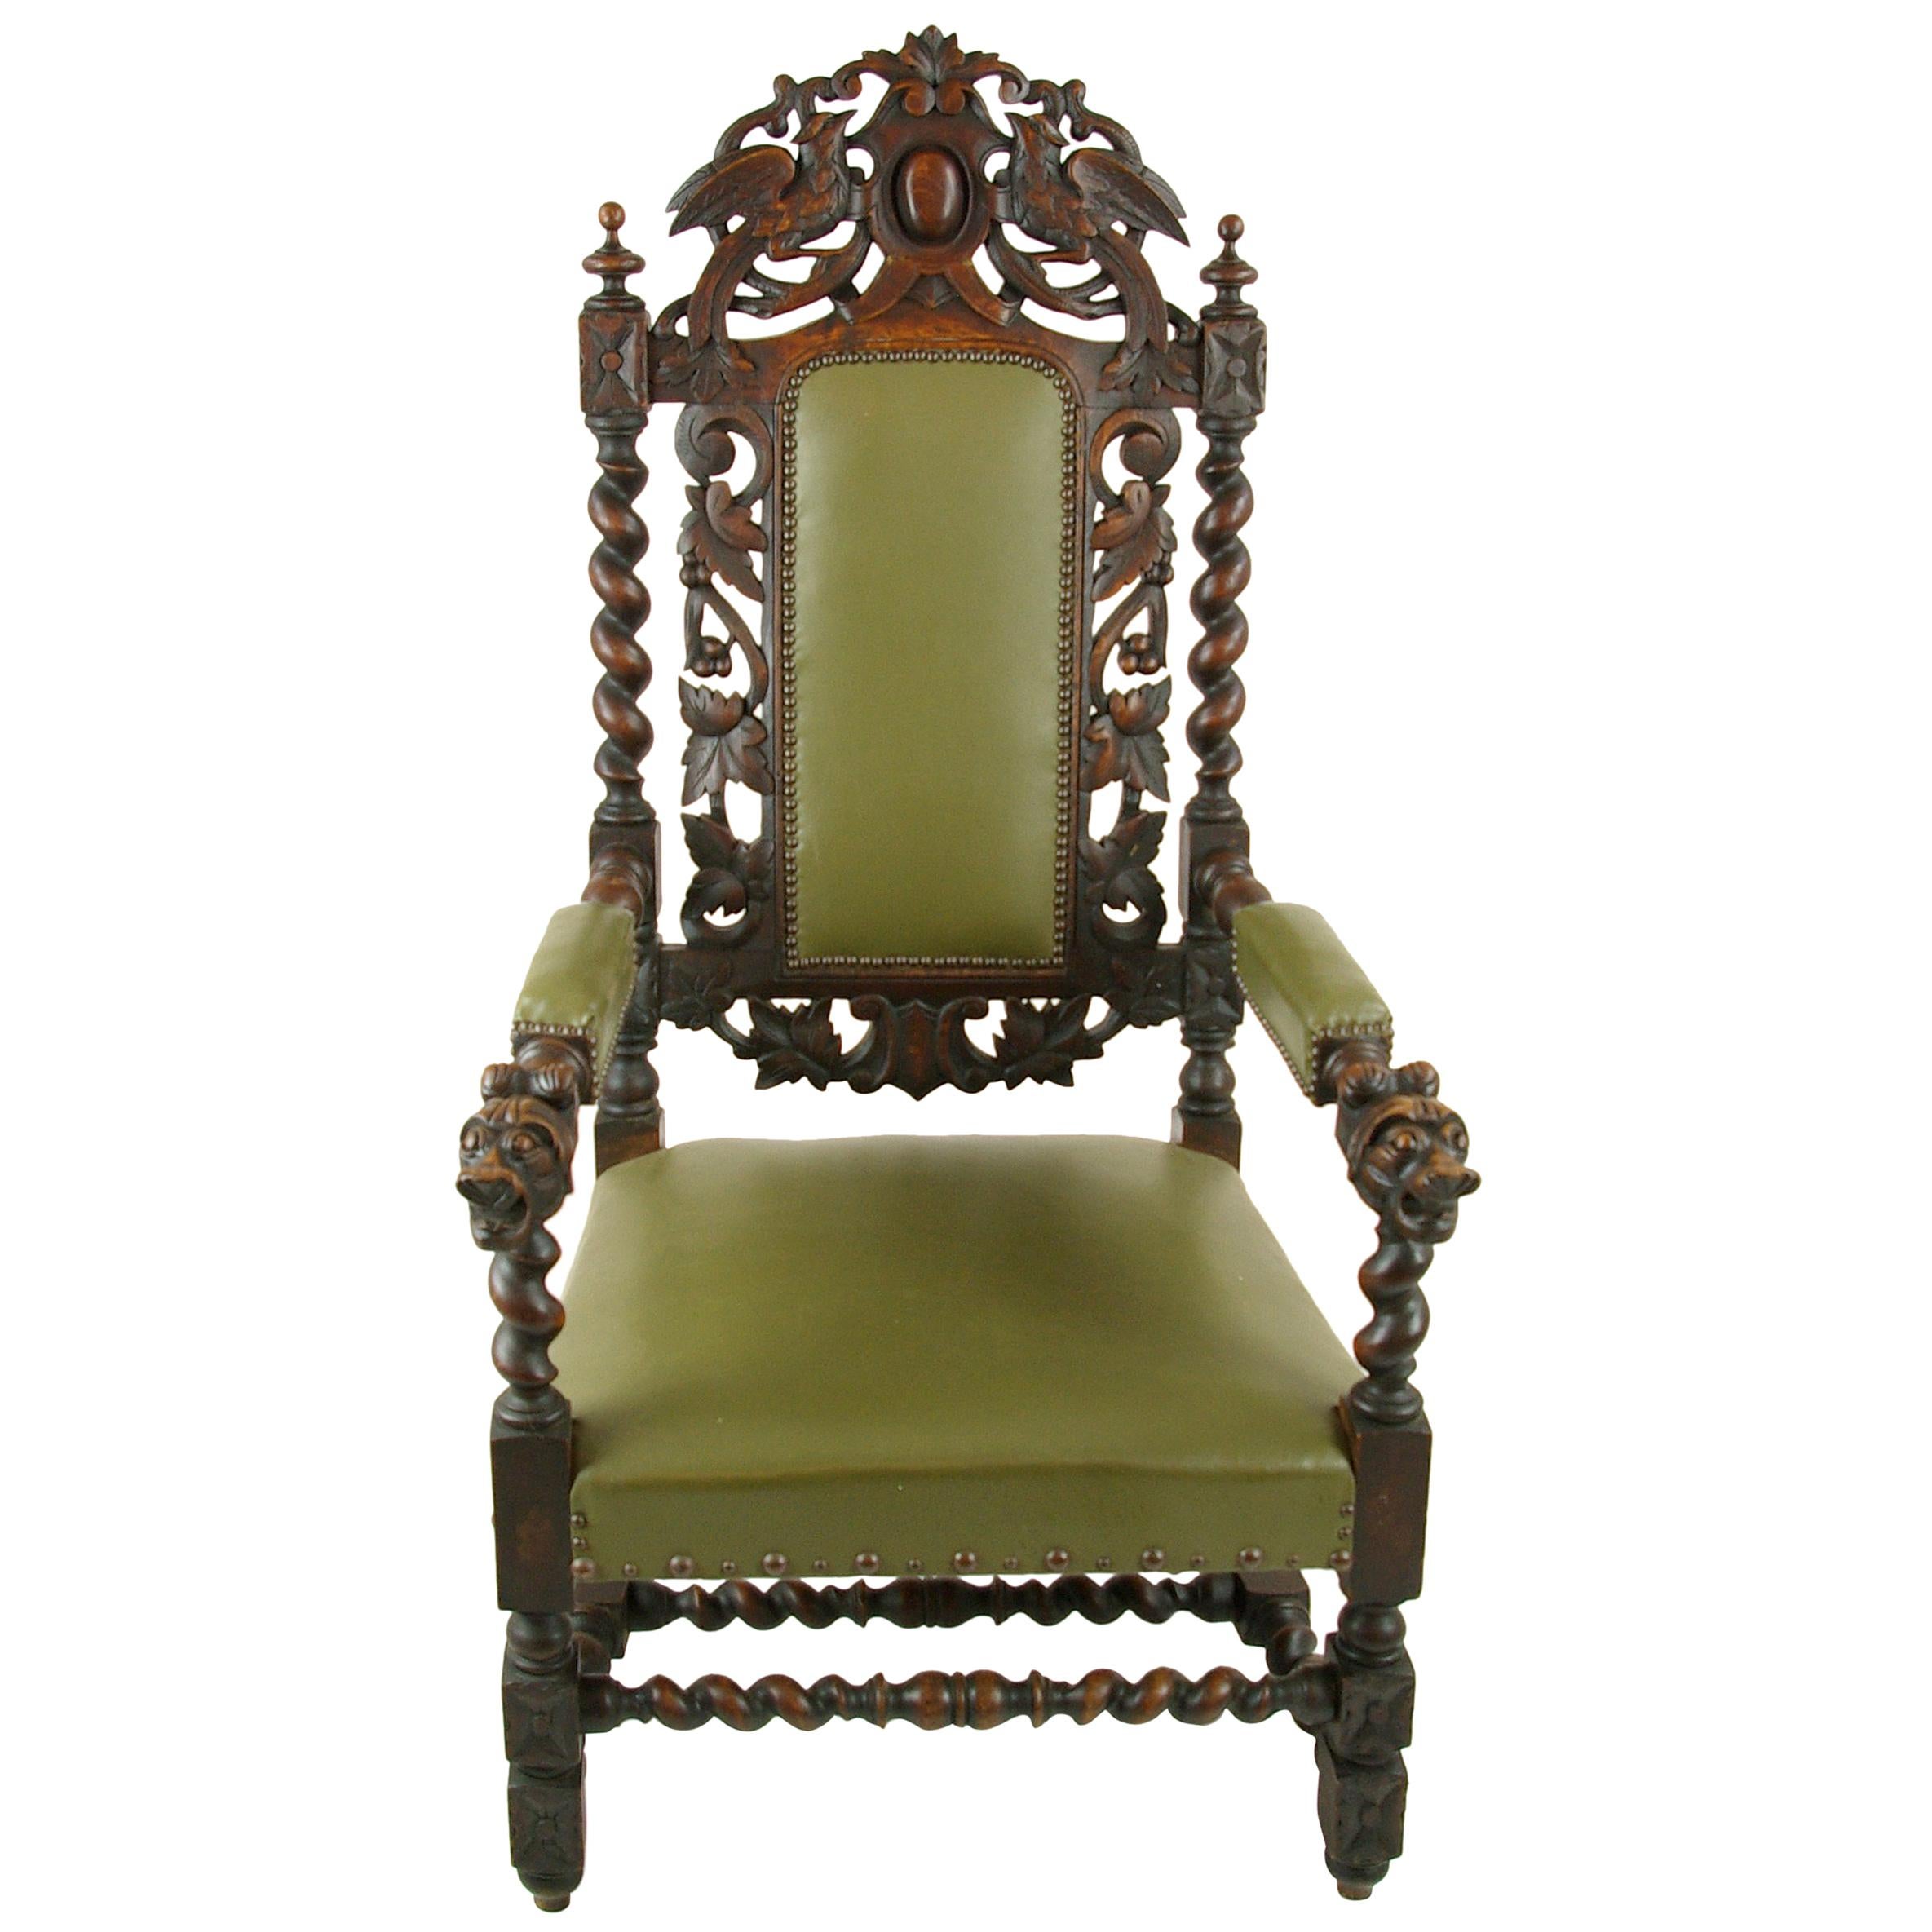 Antique Oak Chair, Victorian Carved Barley Twist Chair, Scotland 1880s, B1333